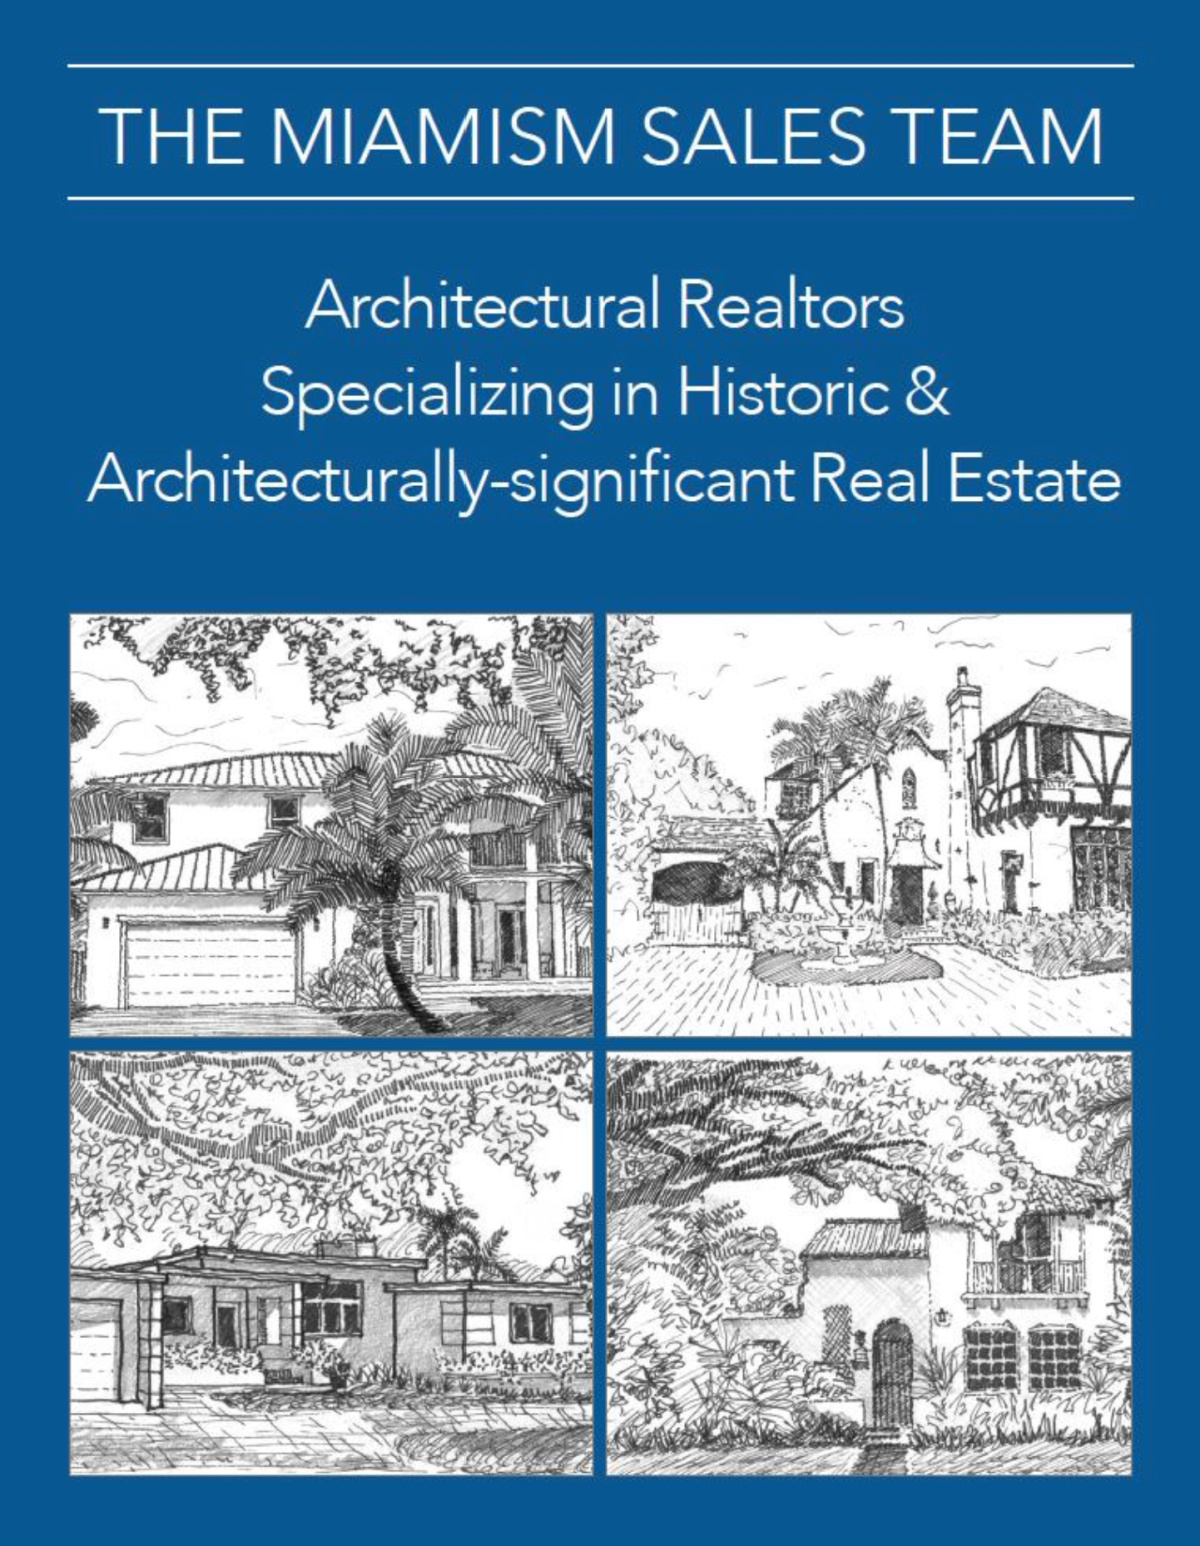 Miamism Sales Team - Architectural Realtors + Historic Property Specialists